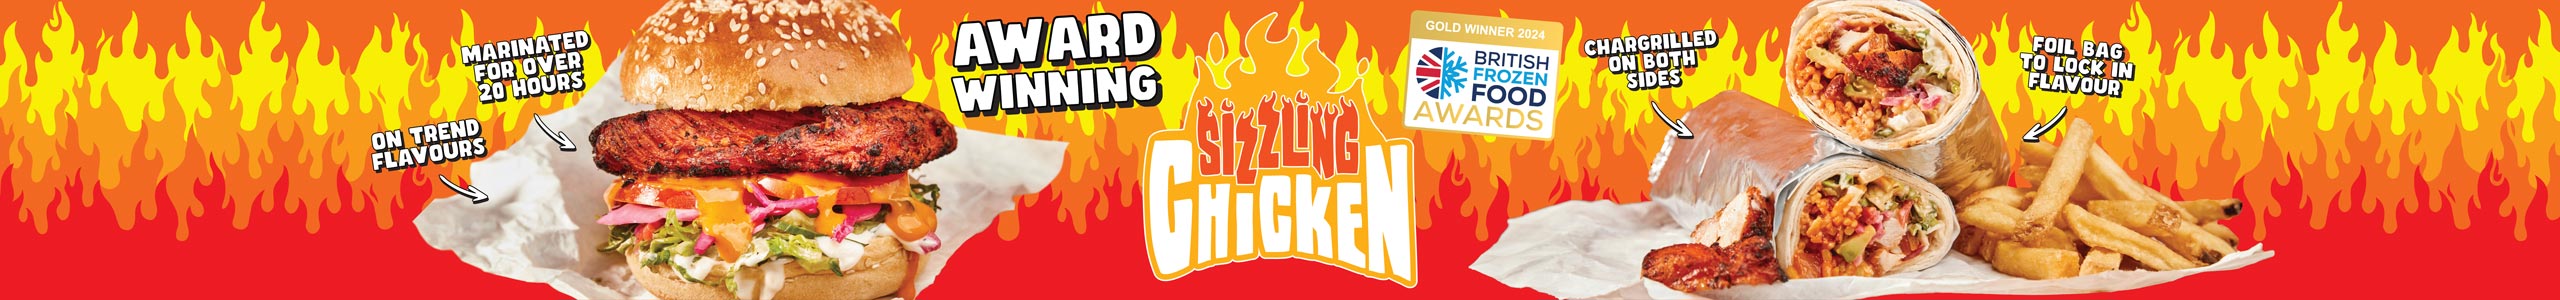 Sizzling Chicken Award Brand Banner.jpg